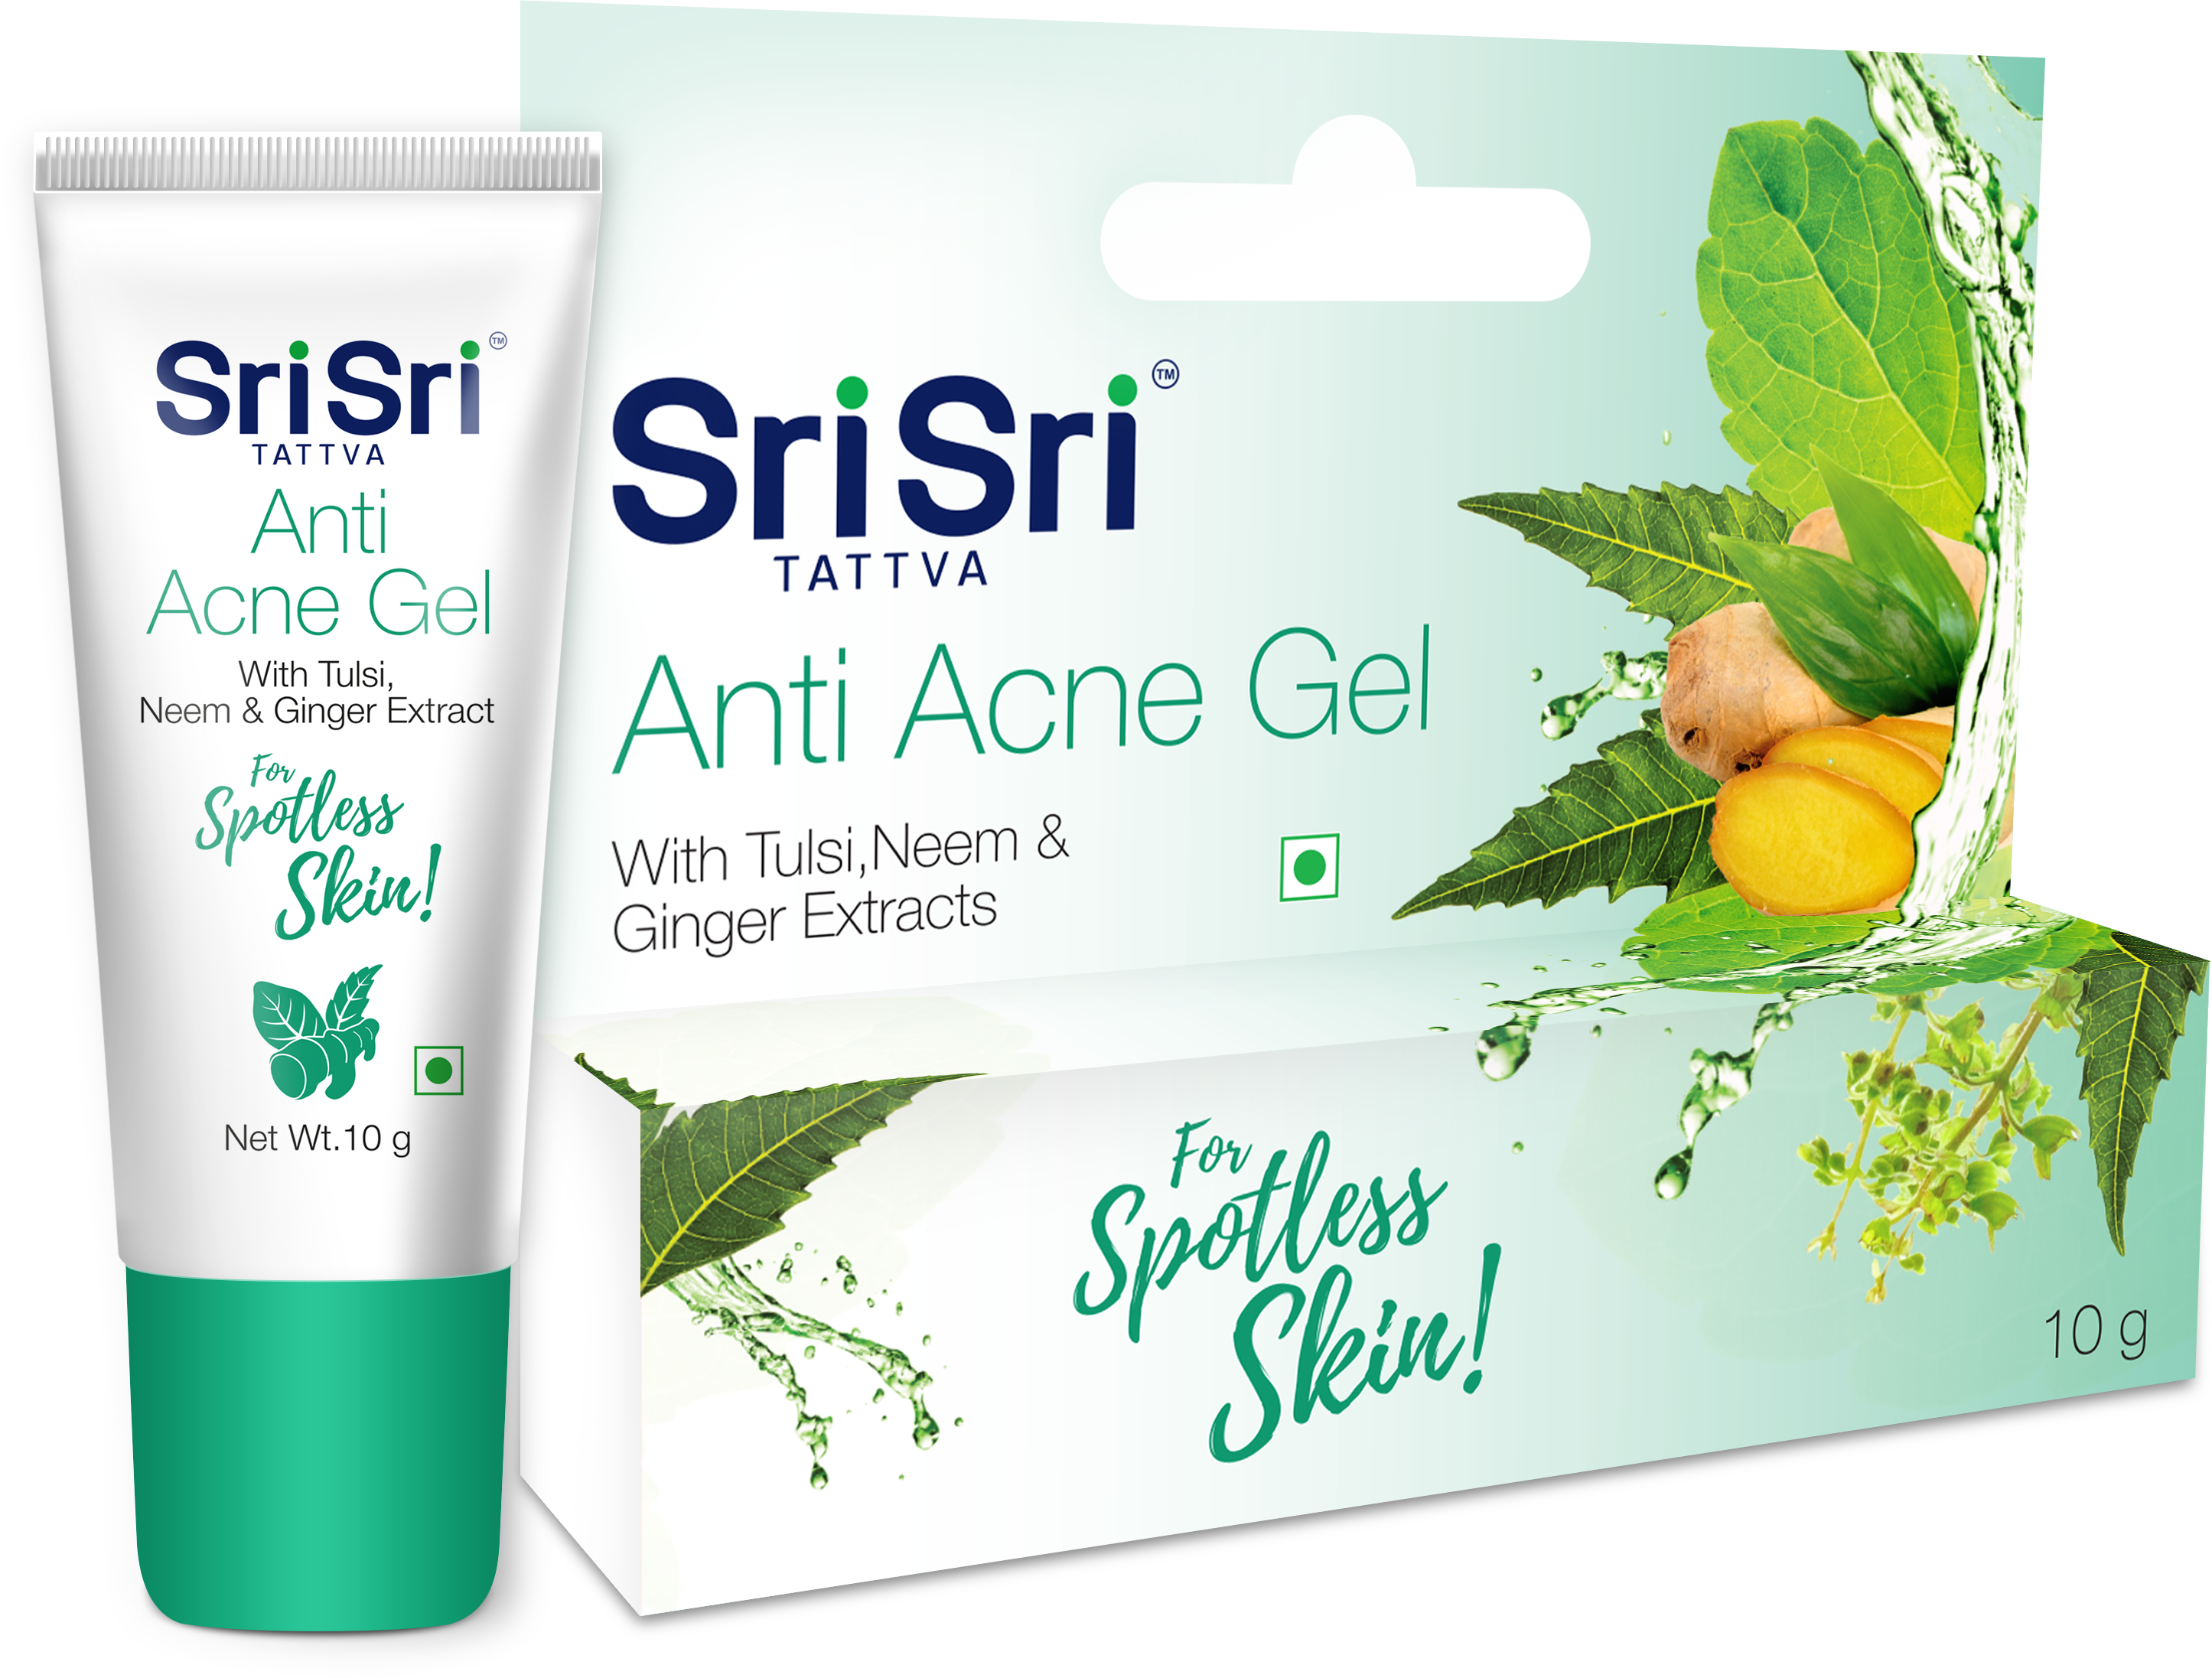 Buy Sri Sri Tattva Anti Acne Gel at Best Price Online